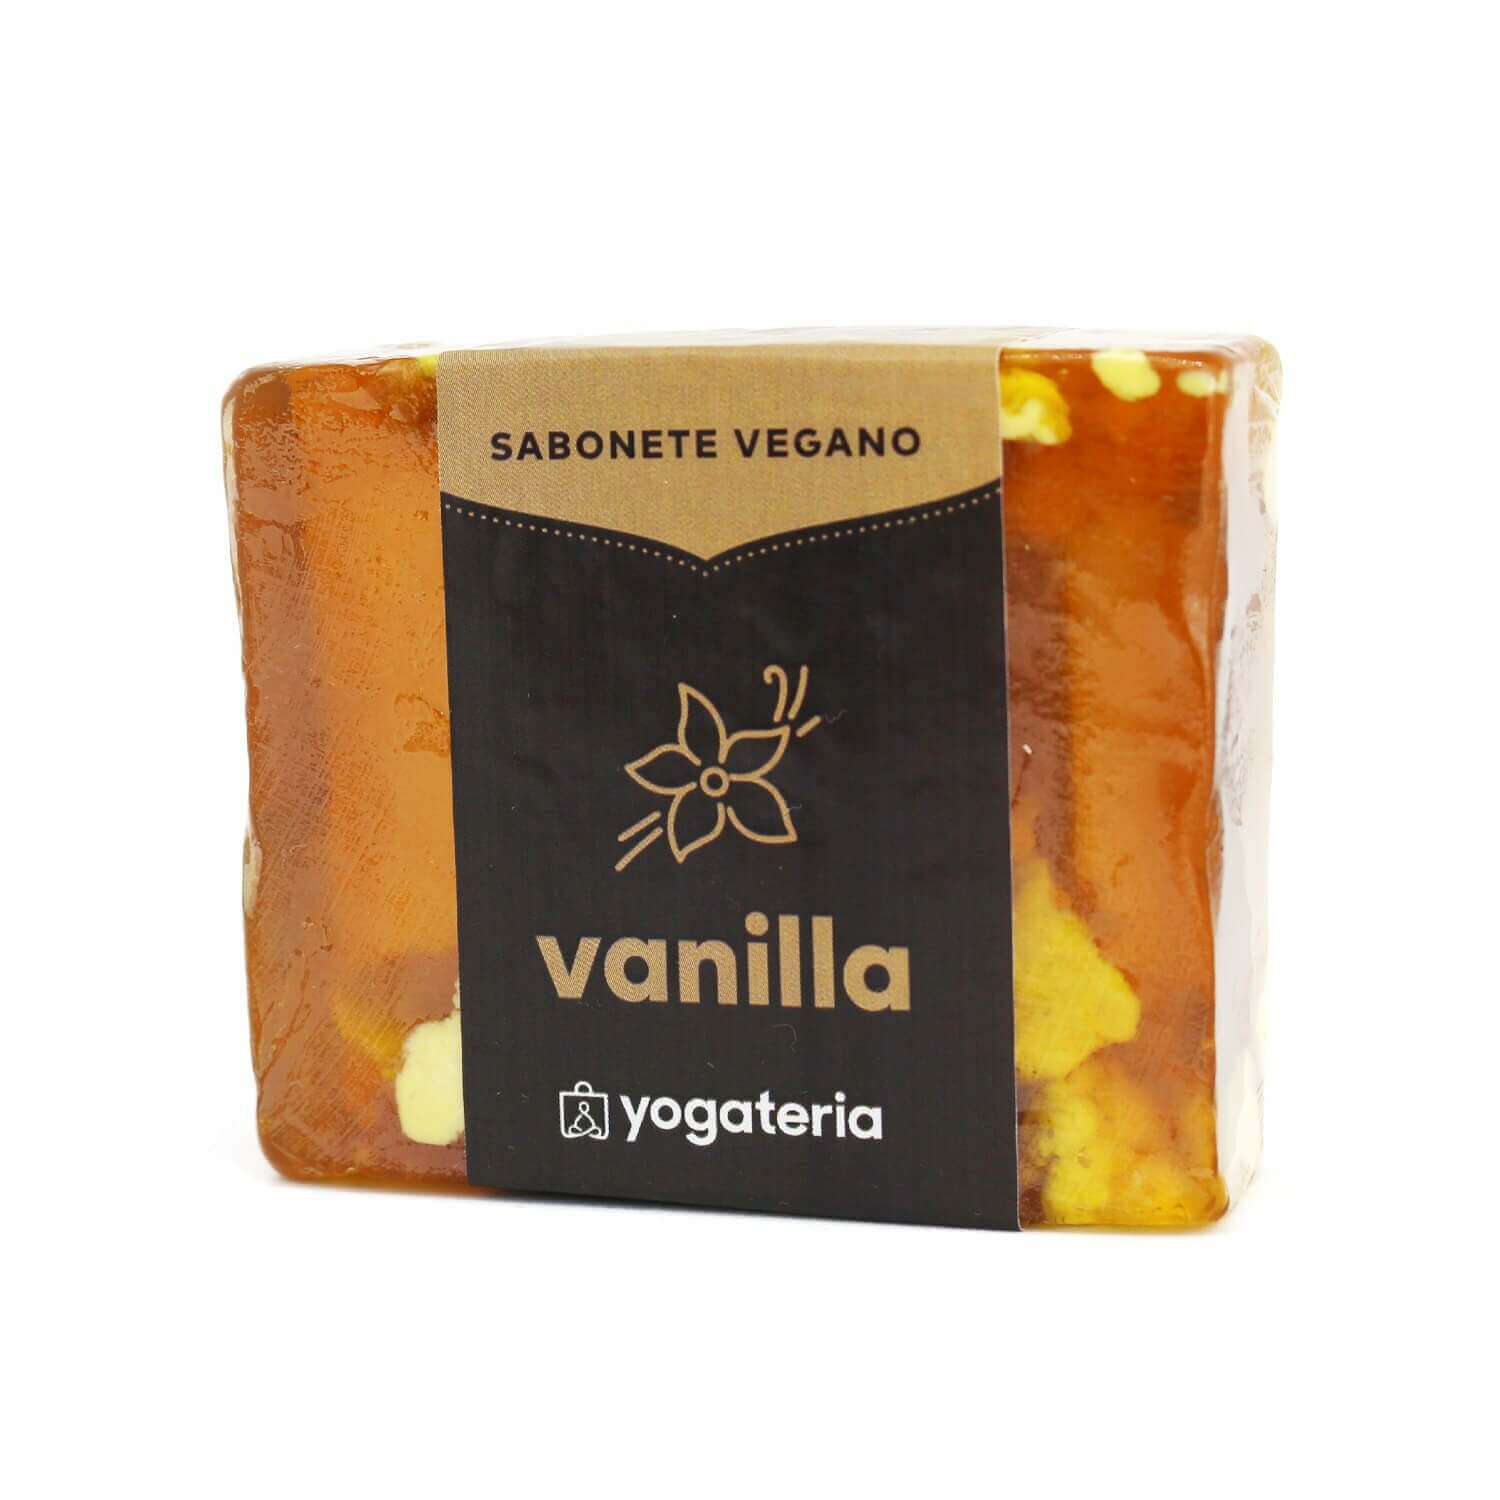 Sabonete Vegano Vanilla 9